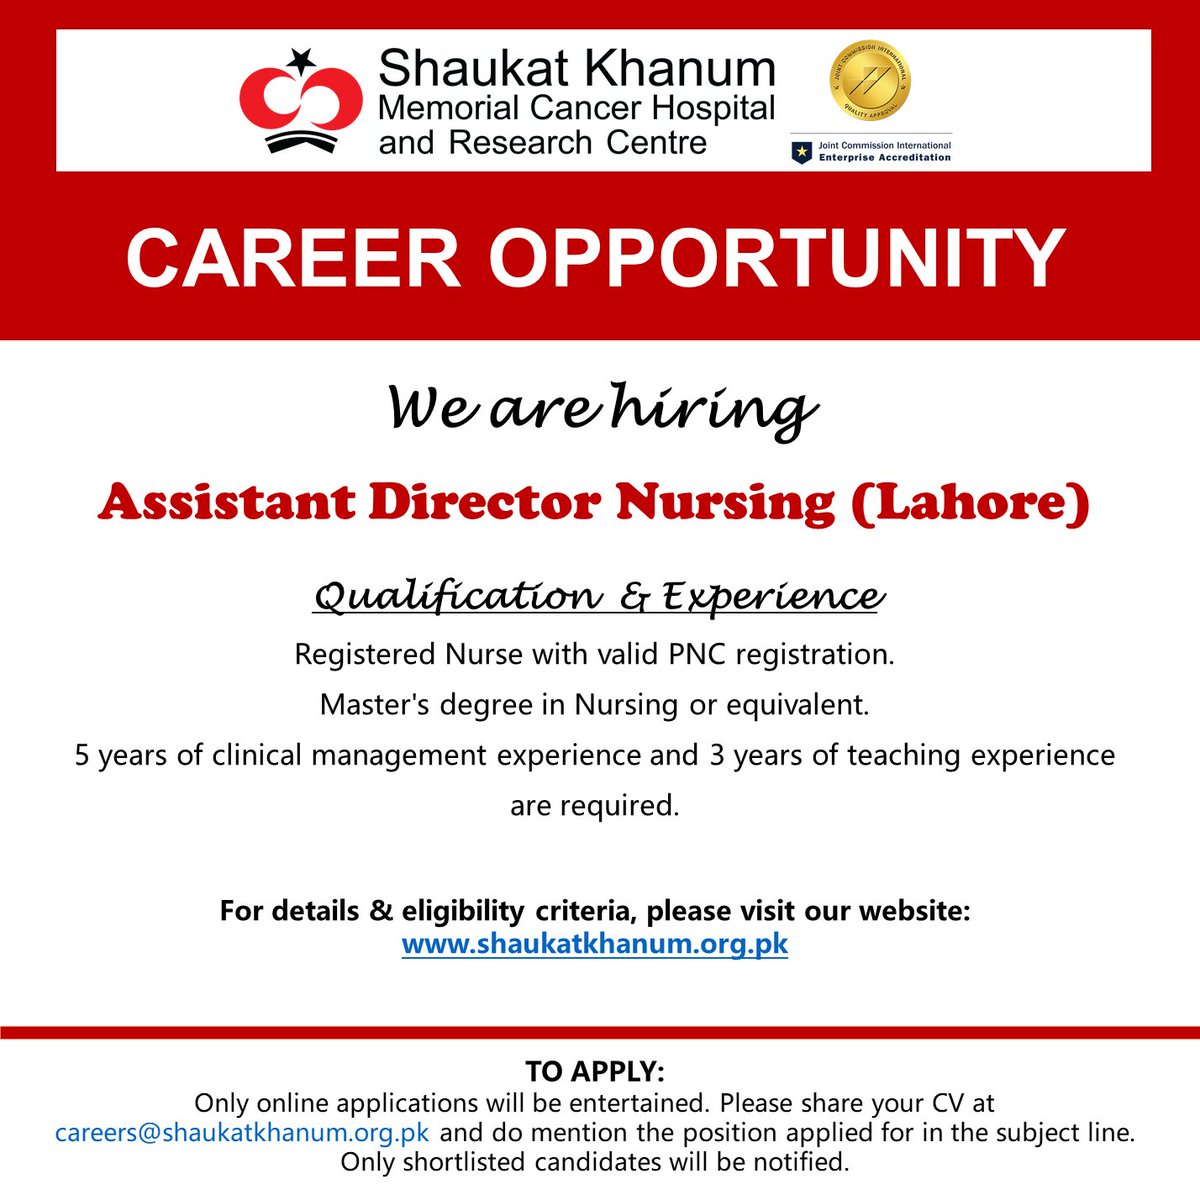 Career Opportunity at Shaukat Khanum Hospital, Lahore.
➡️Assistant Director Nursing (Lahore)

For details, visit: shaukatkhanum.org.pk/join-us/curren…

📞 +92 42 3590 5000 Ext.3028, 3031, 3038, 3041, 3057
✉️ careers@shaukatkhanum.org.pk

#CareersAtSKMCH #JobsInLahore